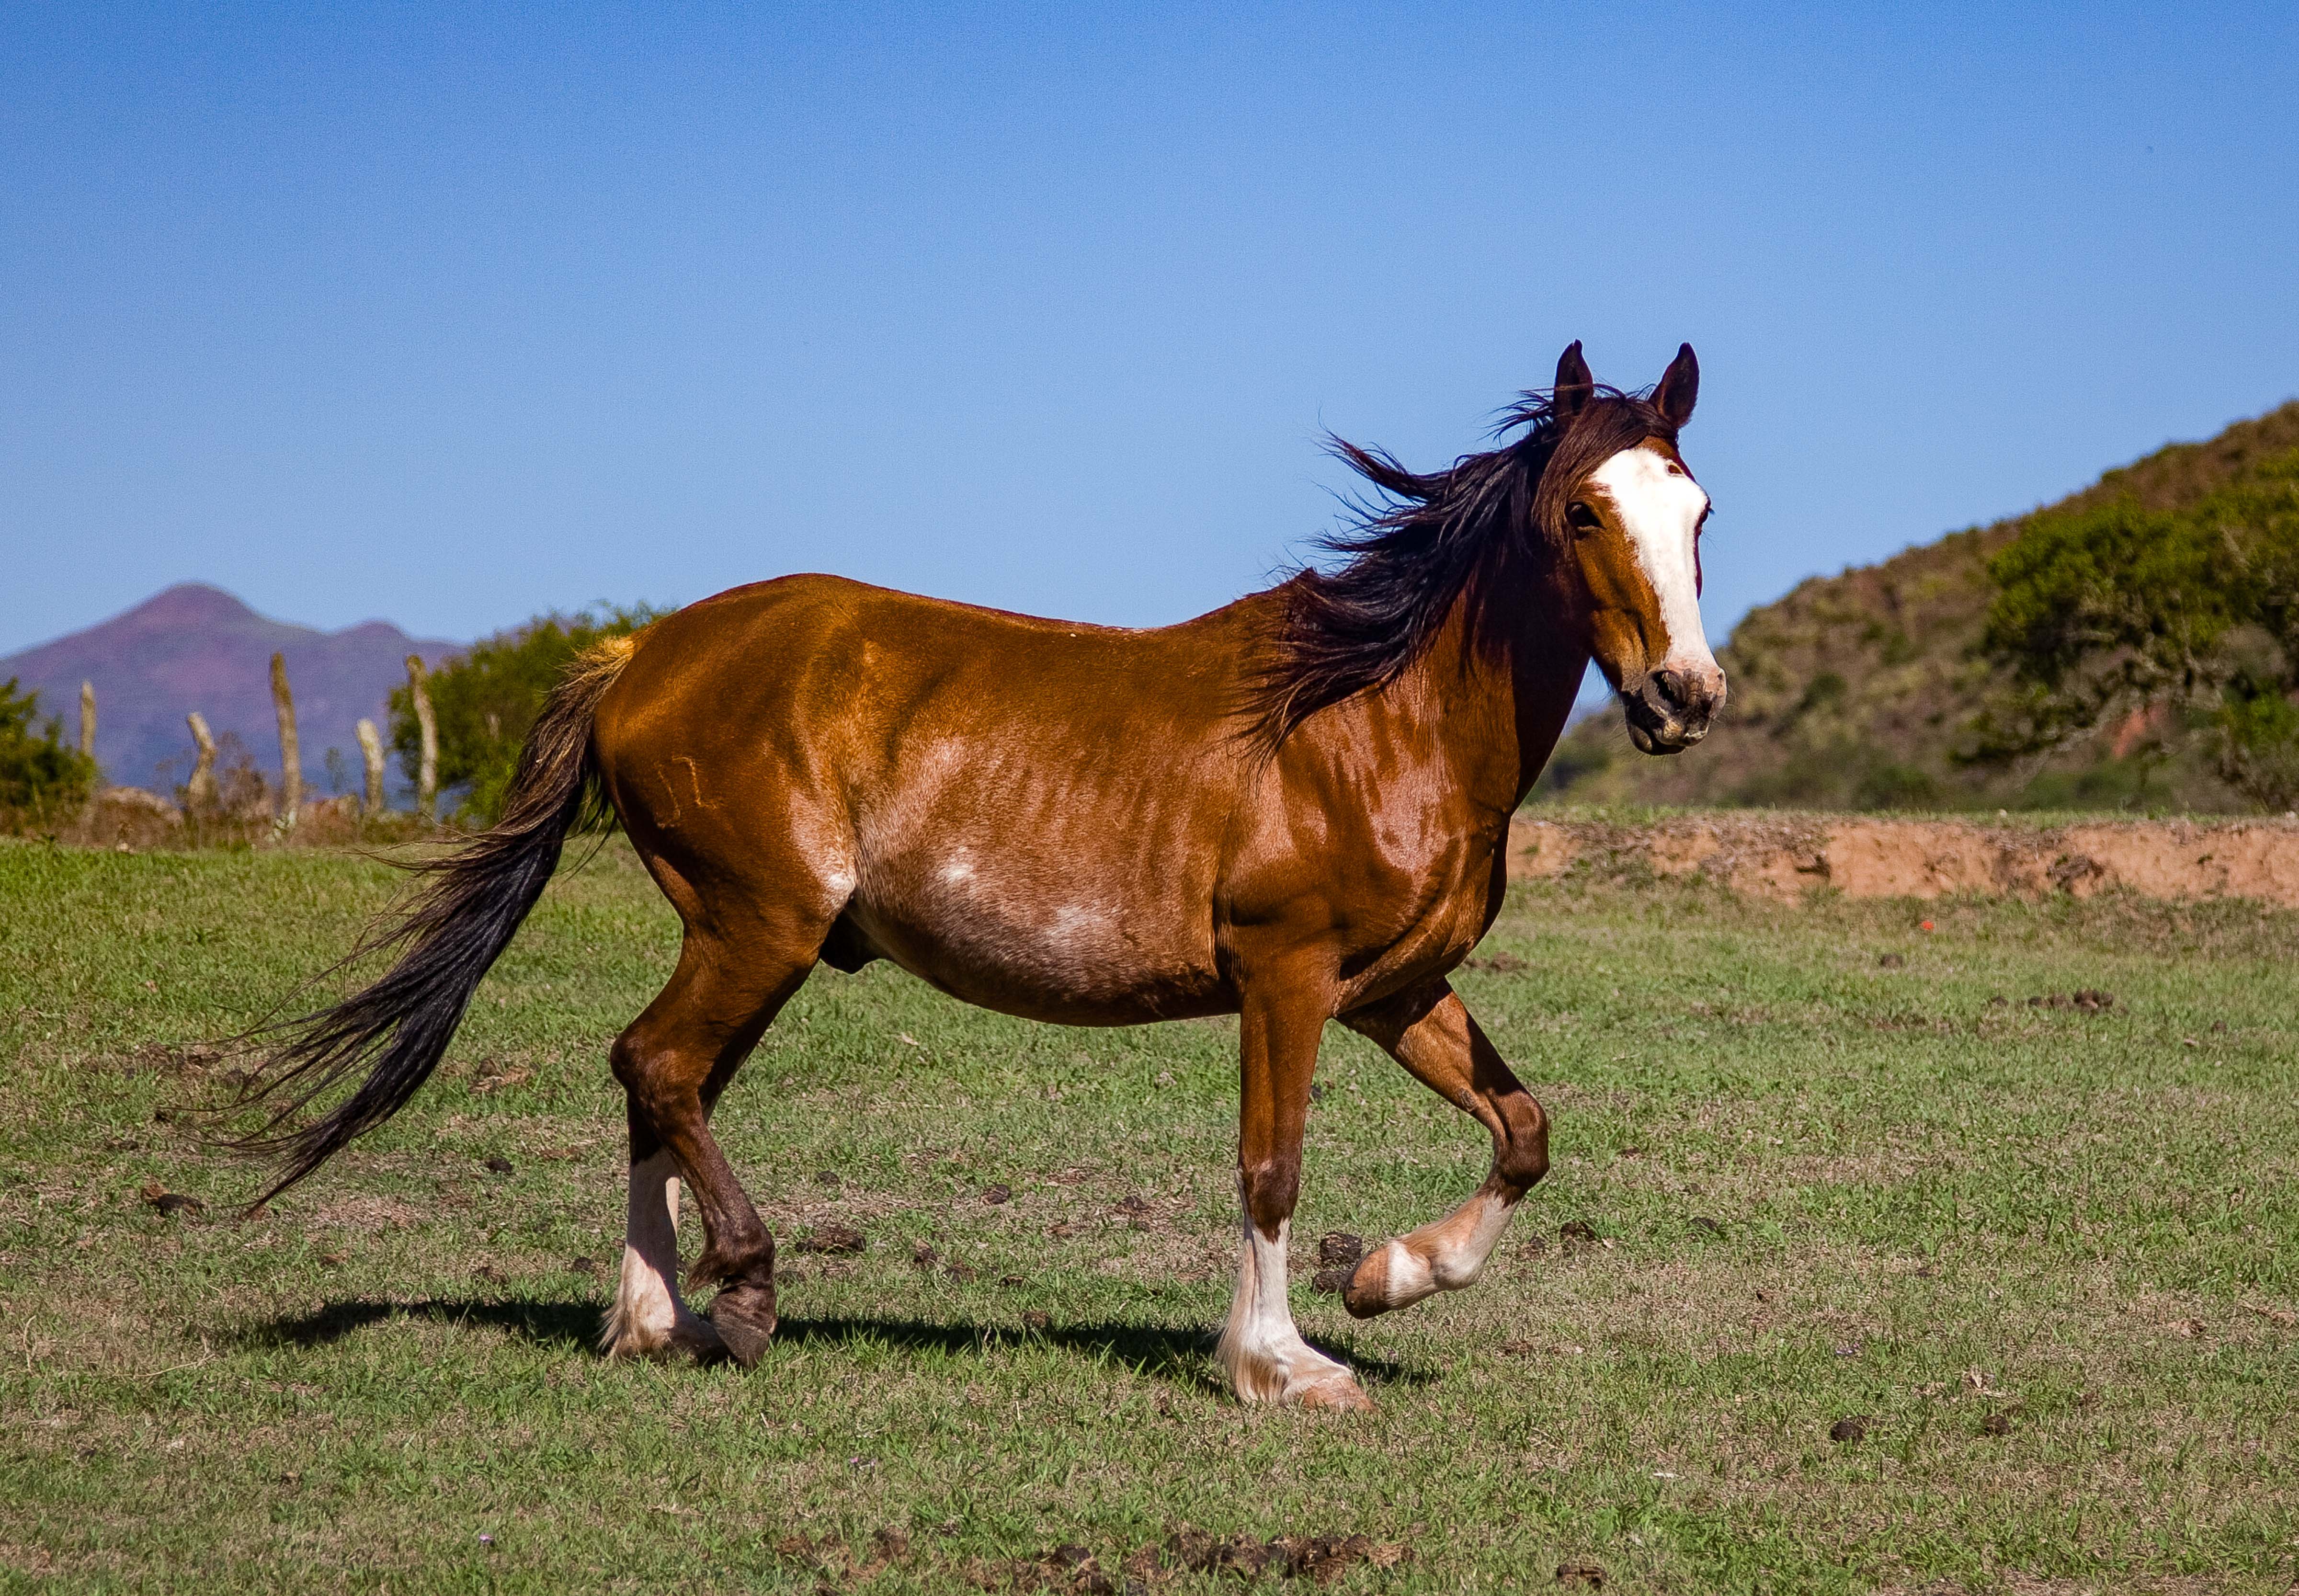 Argentina, Jujuy Prov, Horse, 2010, IMG 8687 CU1